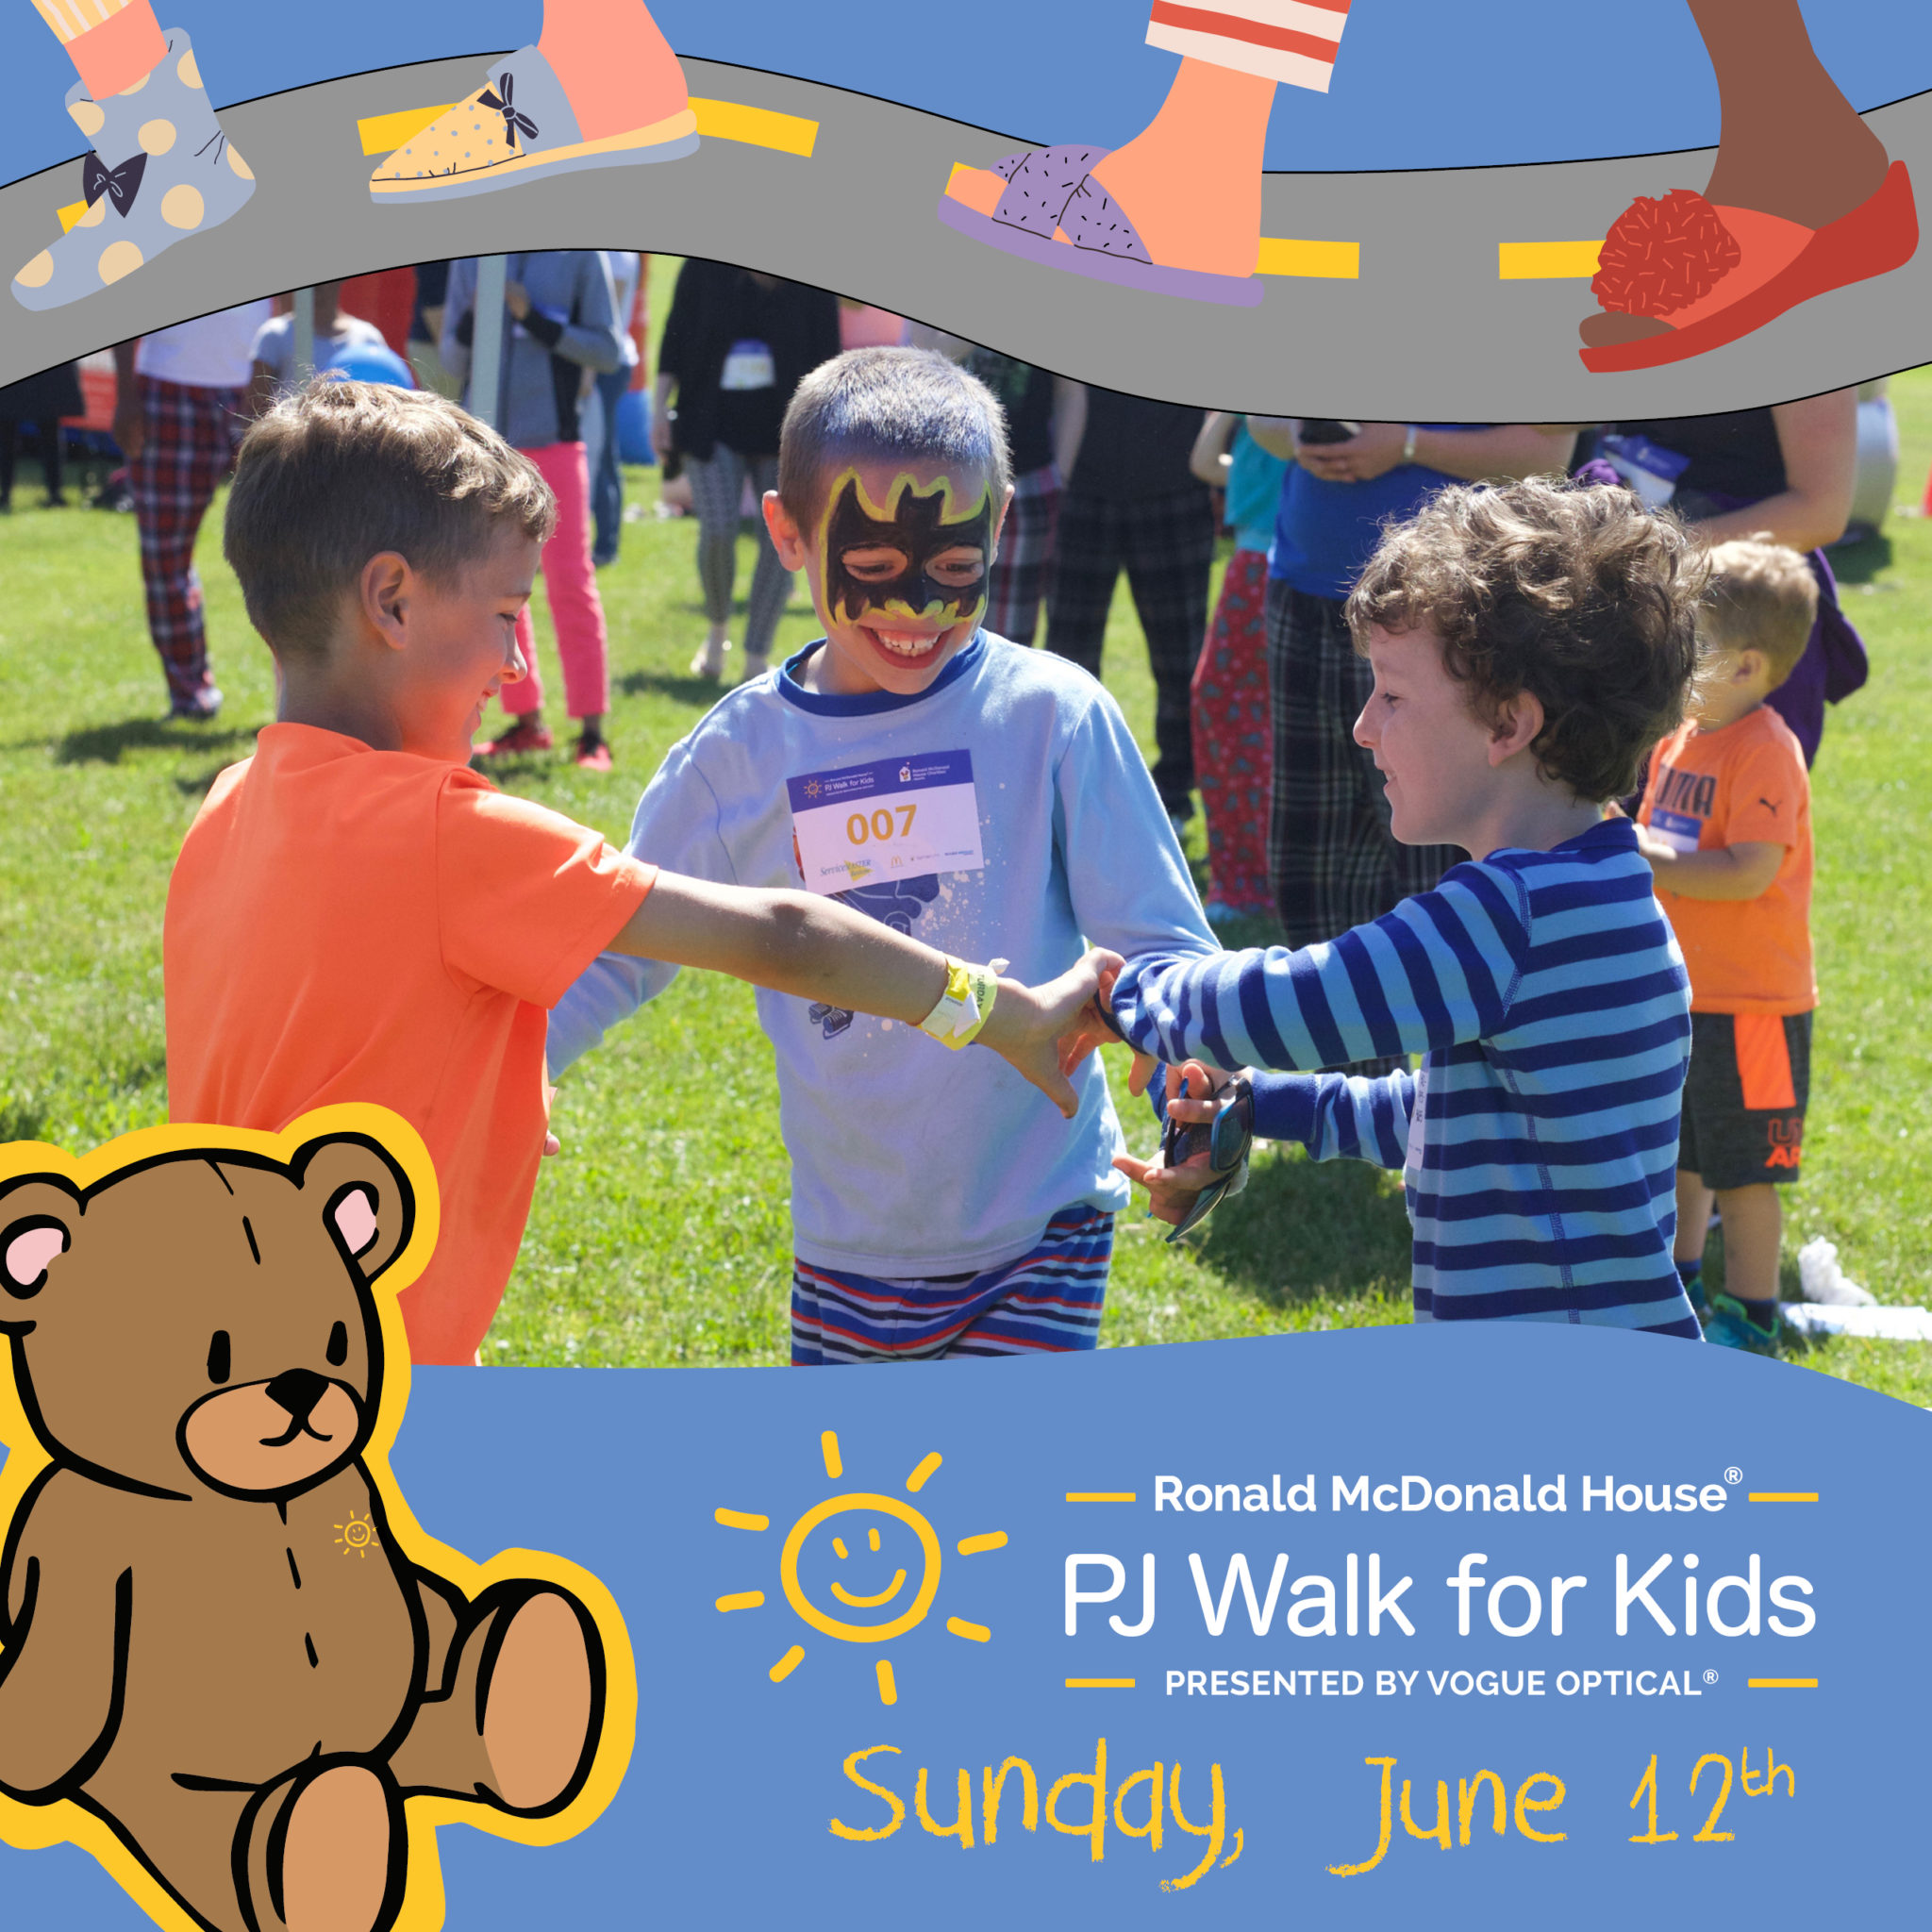 PJ Walk For Kids - Sunday, June 12th